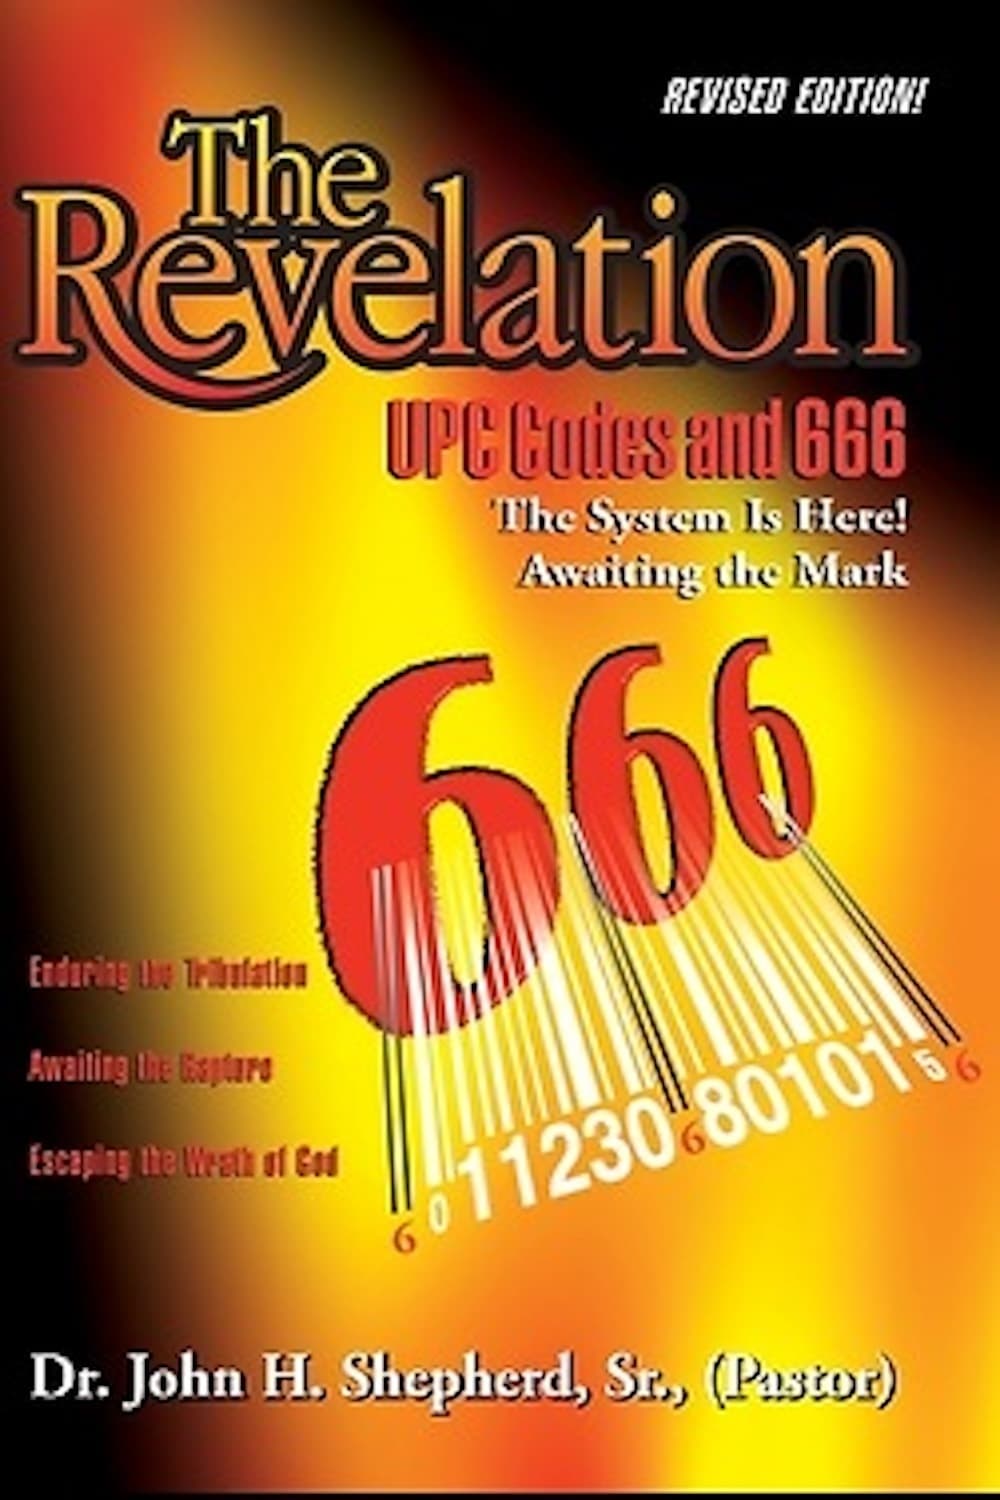 UPC Codes and 666